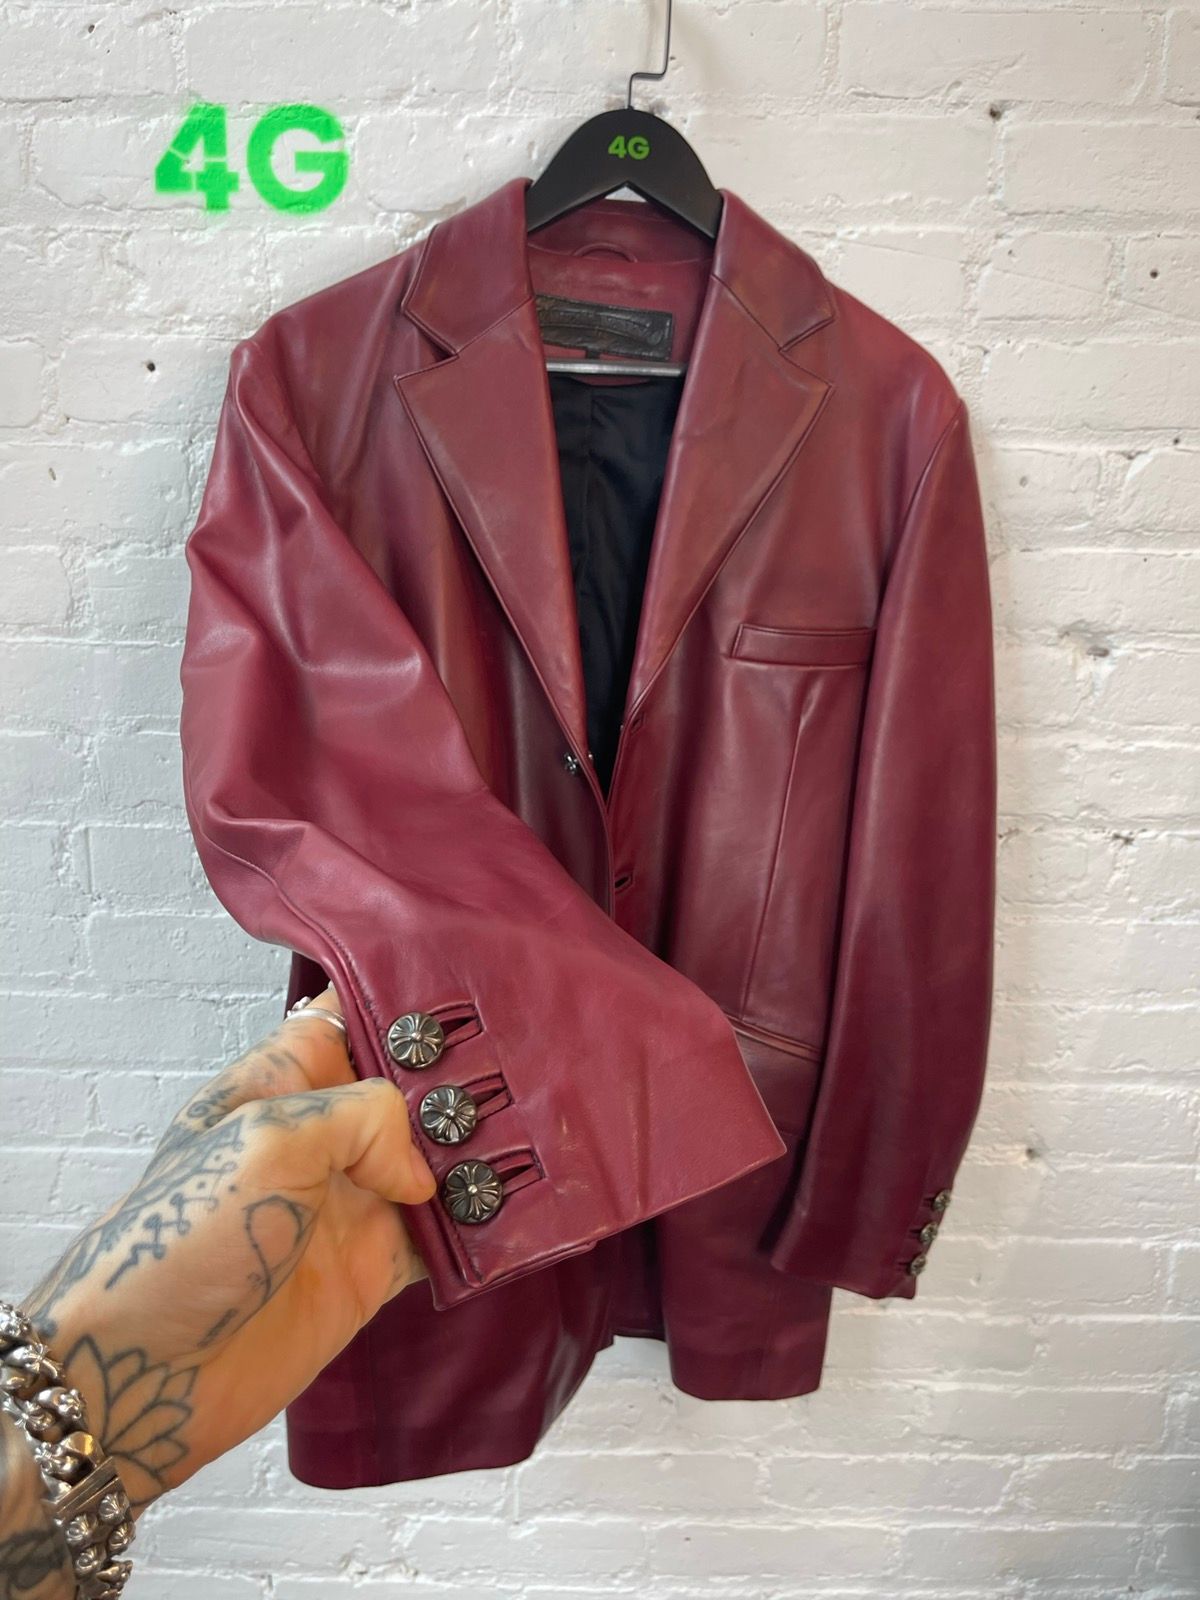 Chrome Hearts OxBlood Red Leather Blazer Jacket M